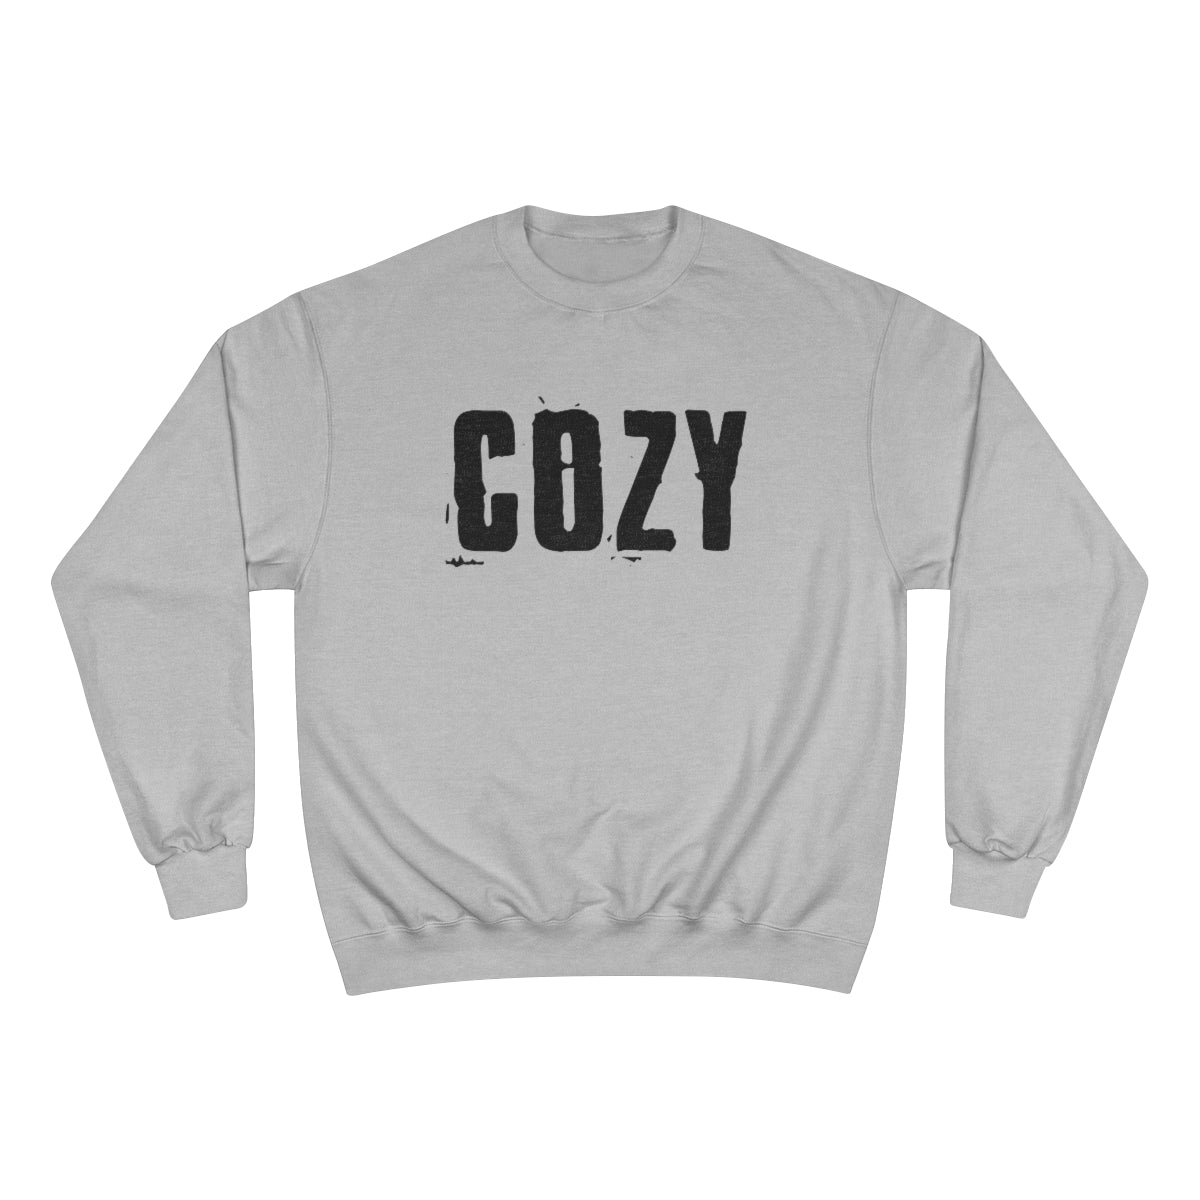 COZY - Champion Sweatshirt